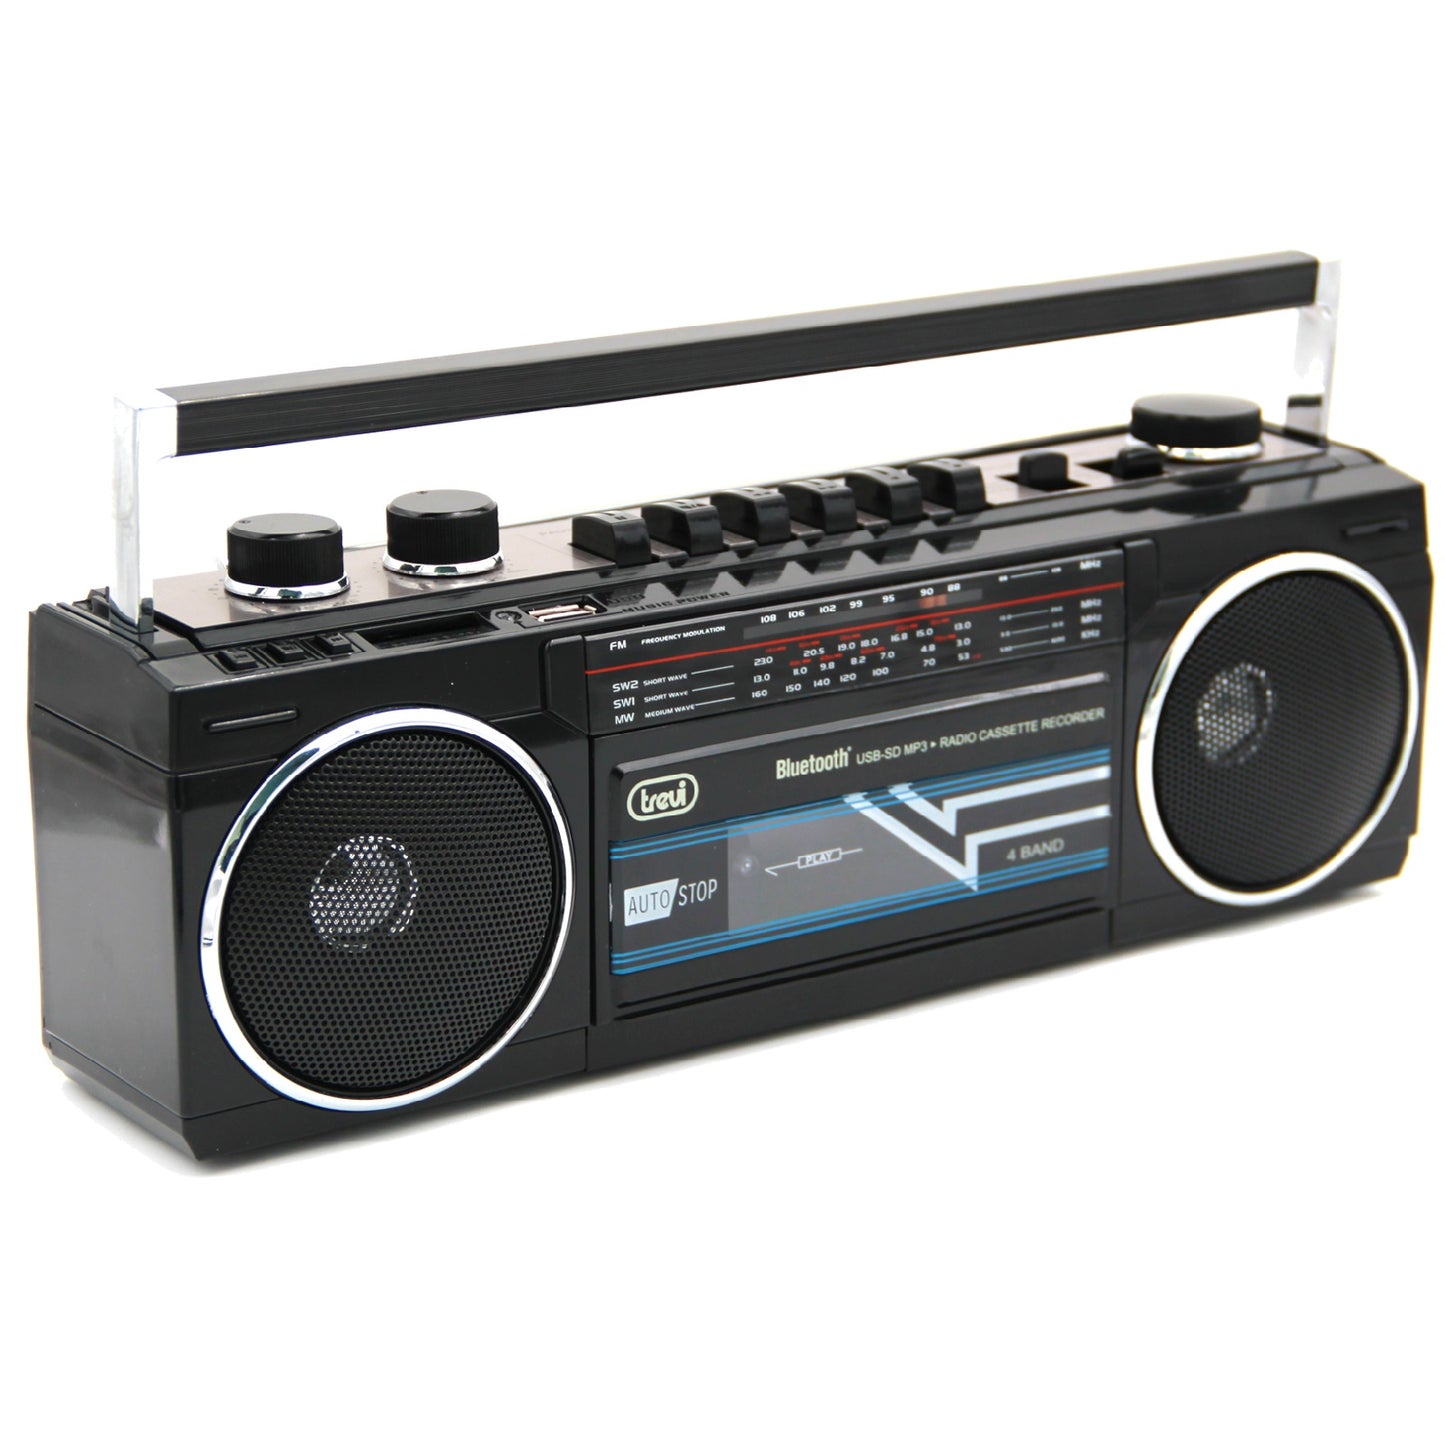 Trevi Portable Boombox - FM Radio, Bluetooth, CD, Casette Tape, USB, Aux-in (RR501BT)